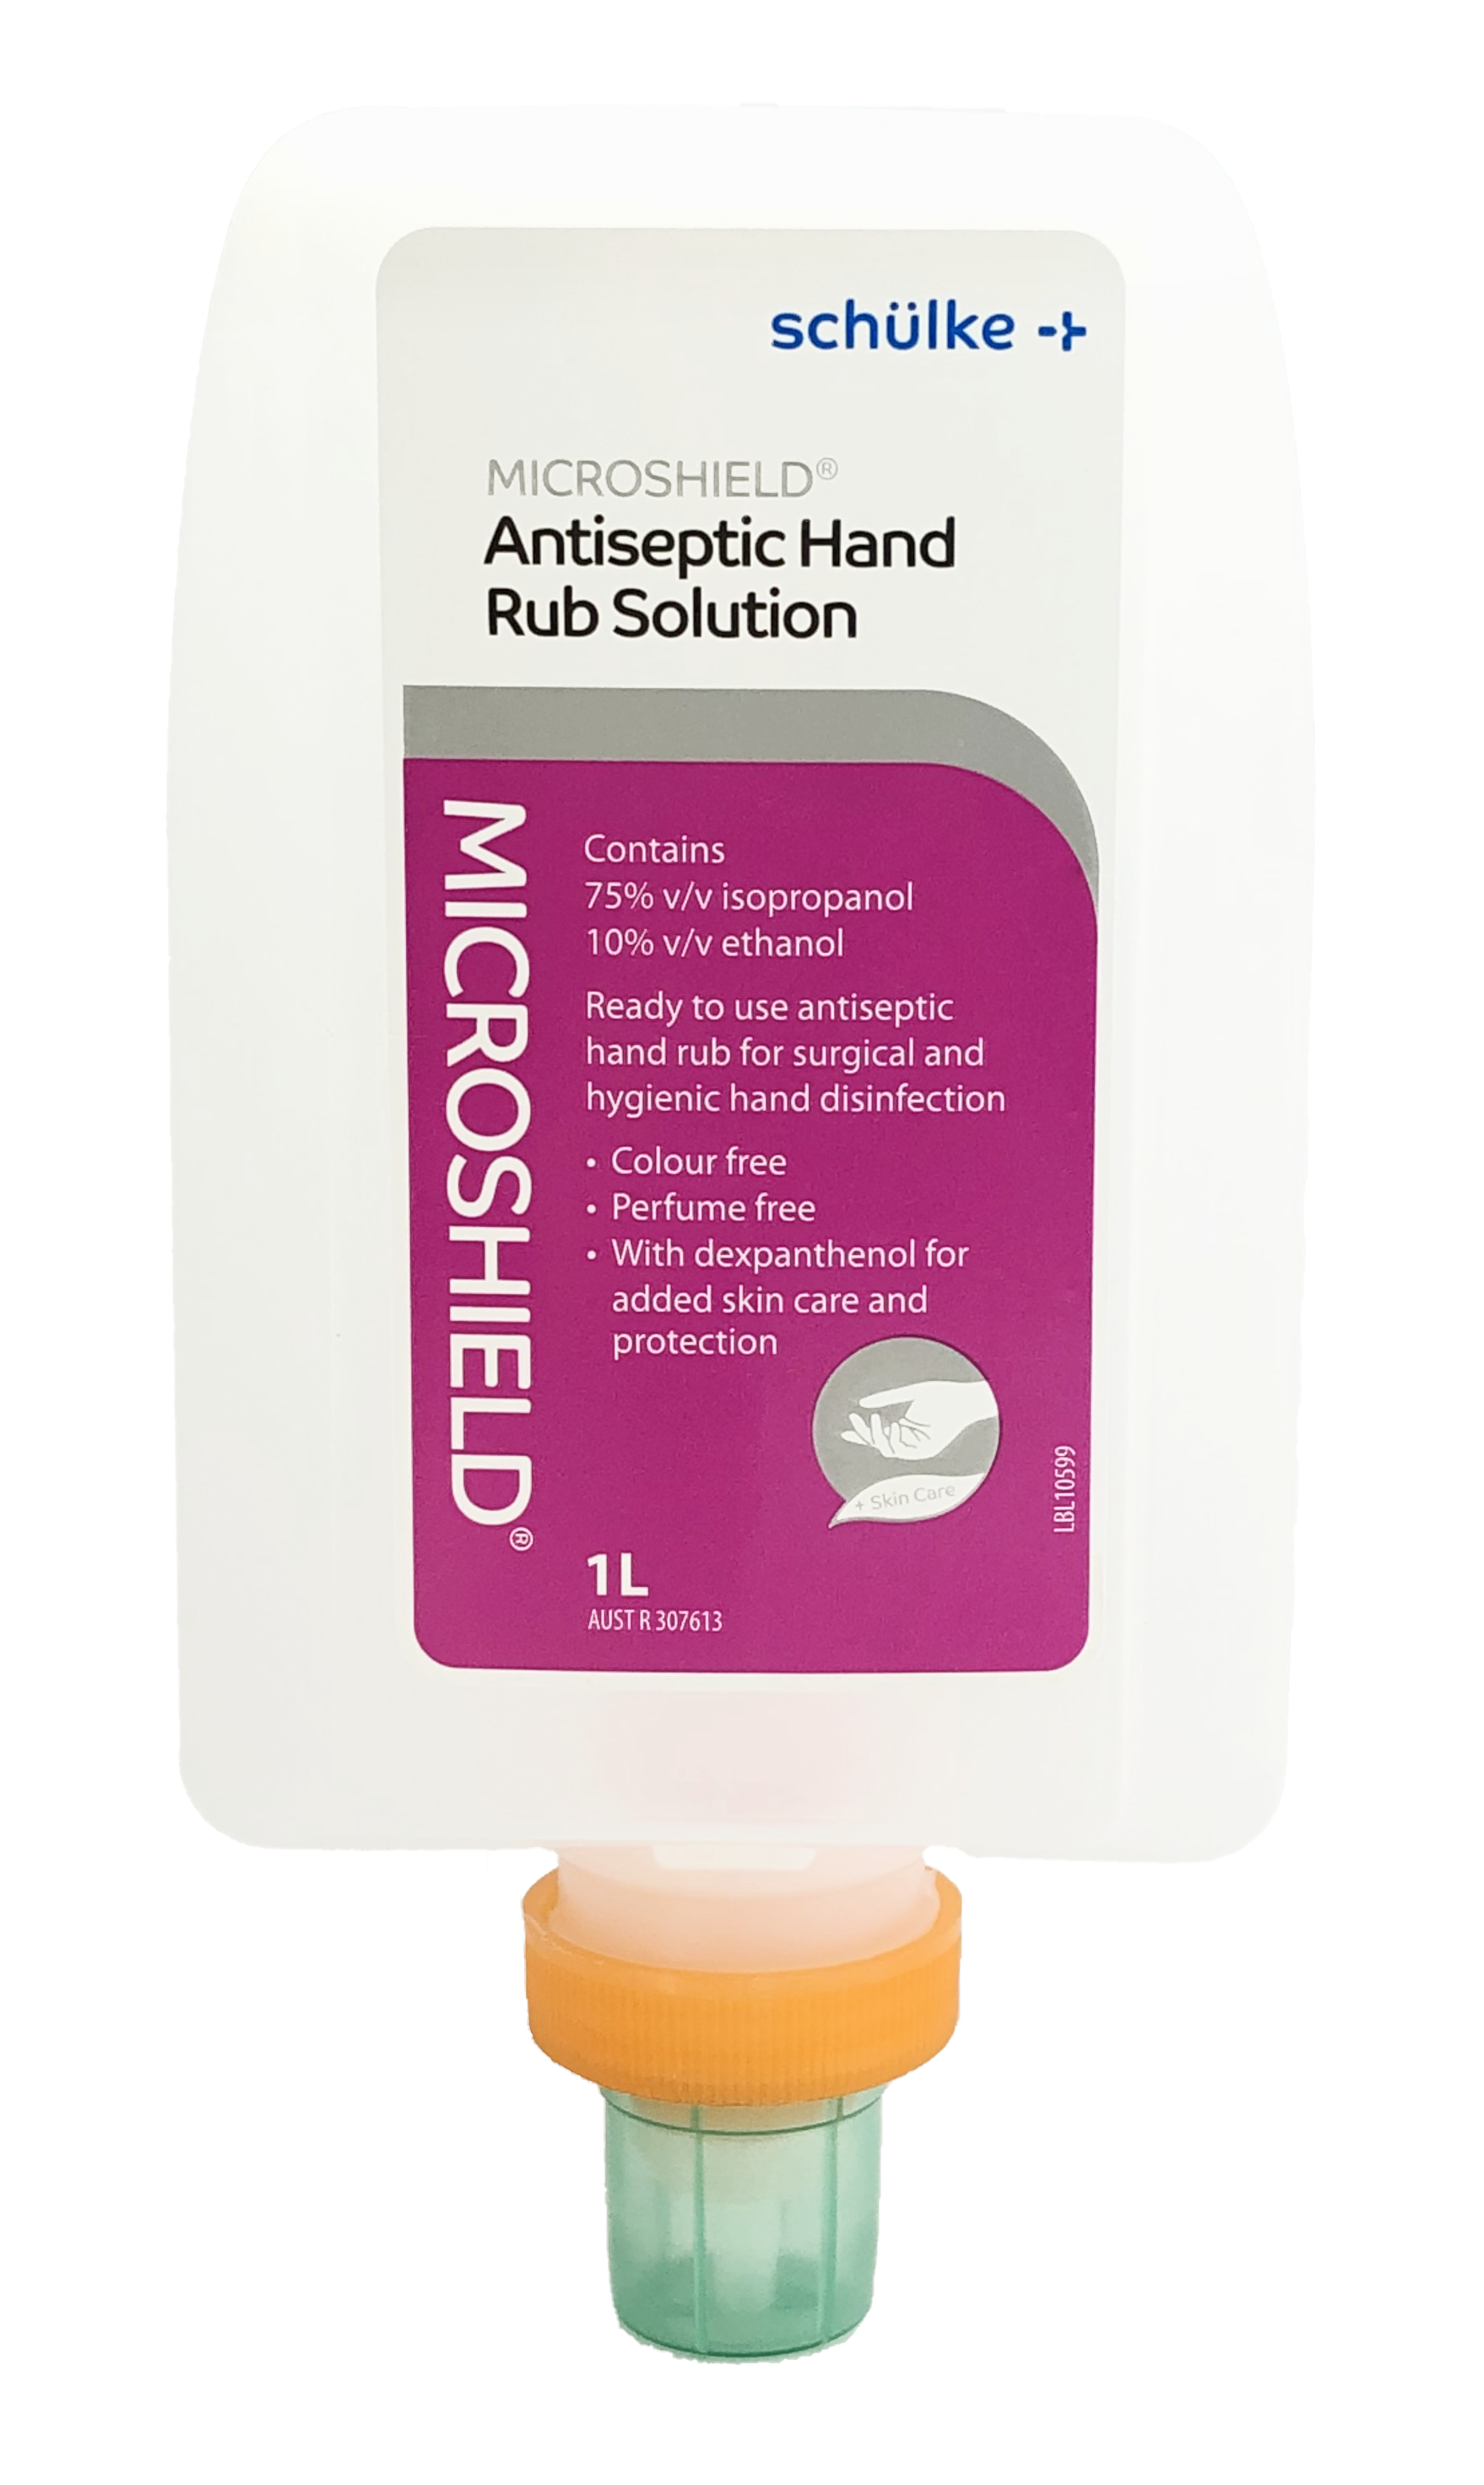 Microshield Antiseptic Hand Rub Solution 1000ml image 0